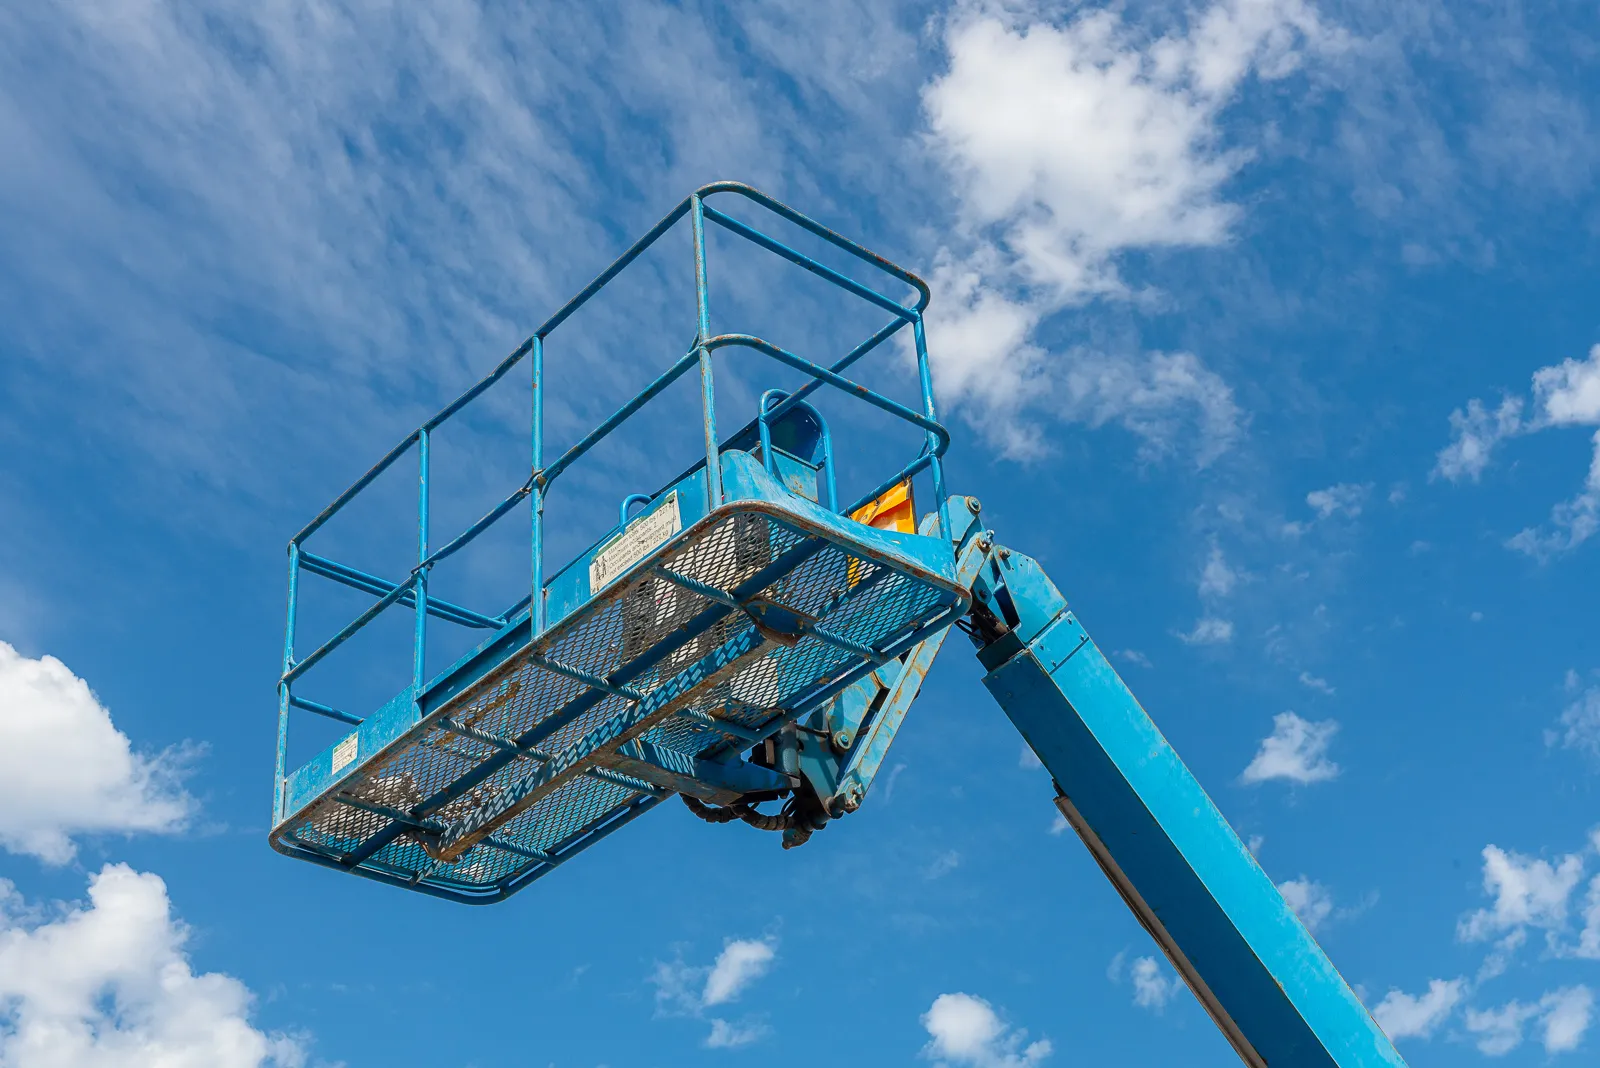 JD Rigging & Construction, Equipment Hire Australia scissor lift for hire